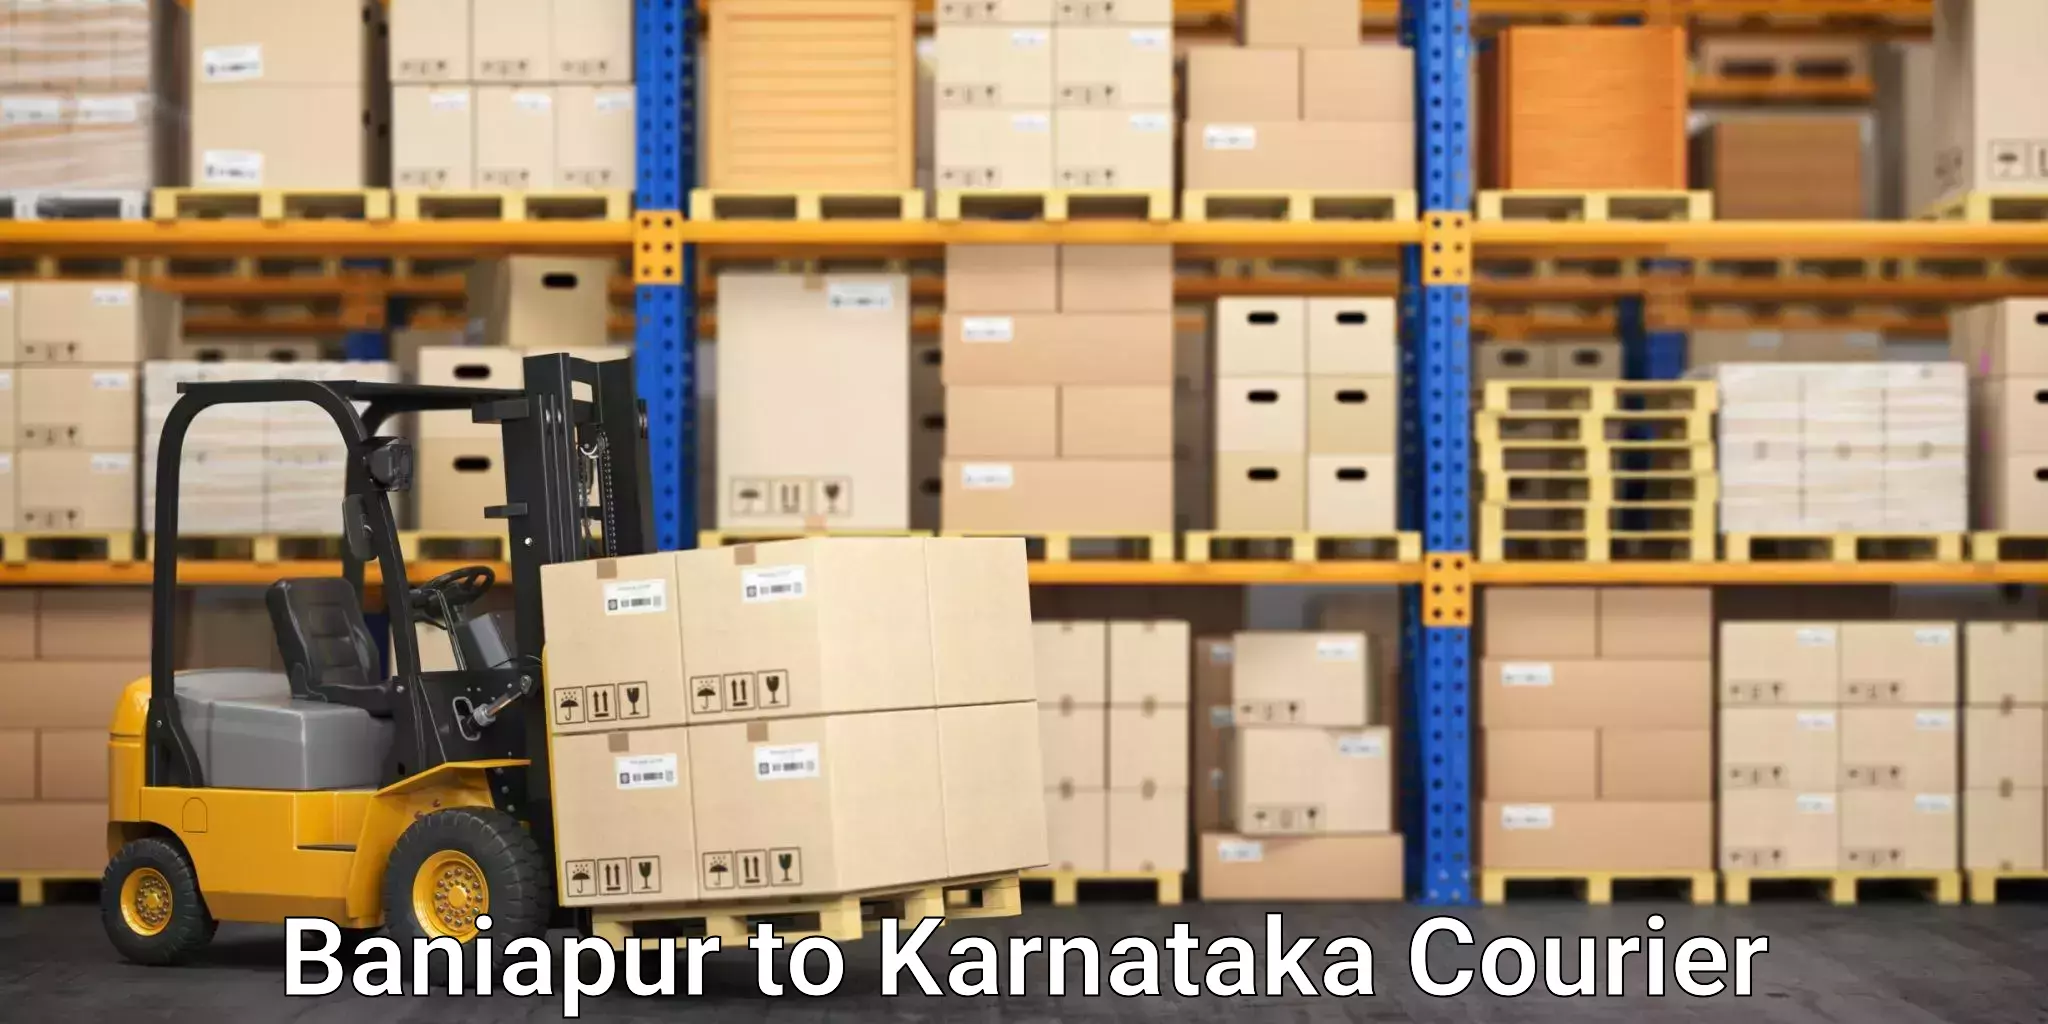 Furniture moving specialists Baniapur to Karnataka